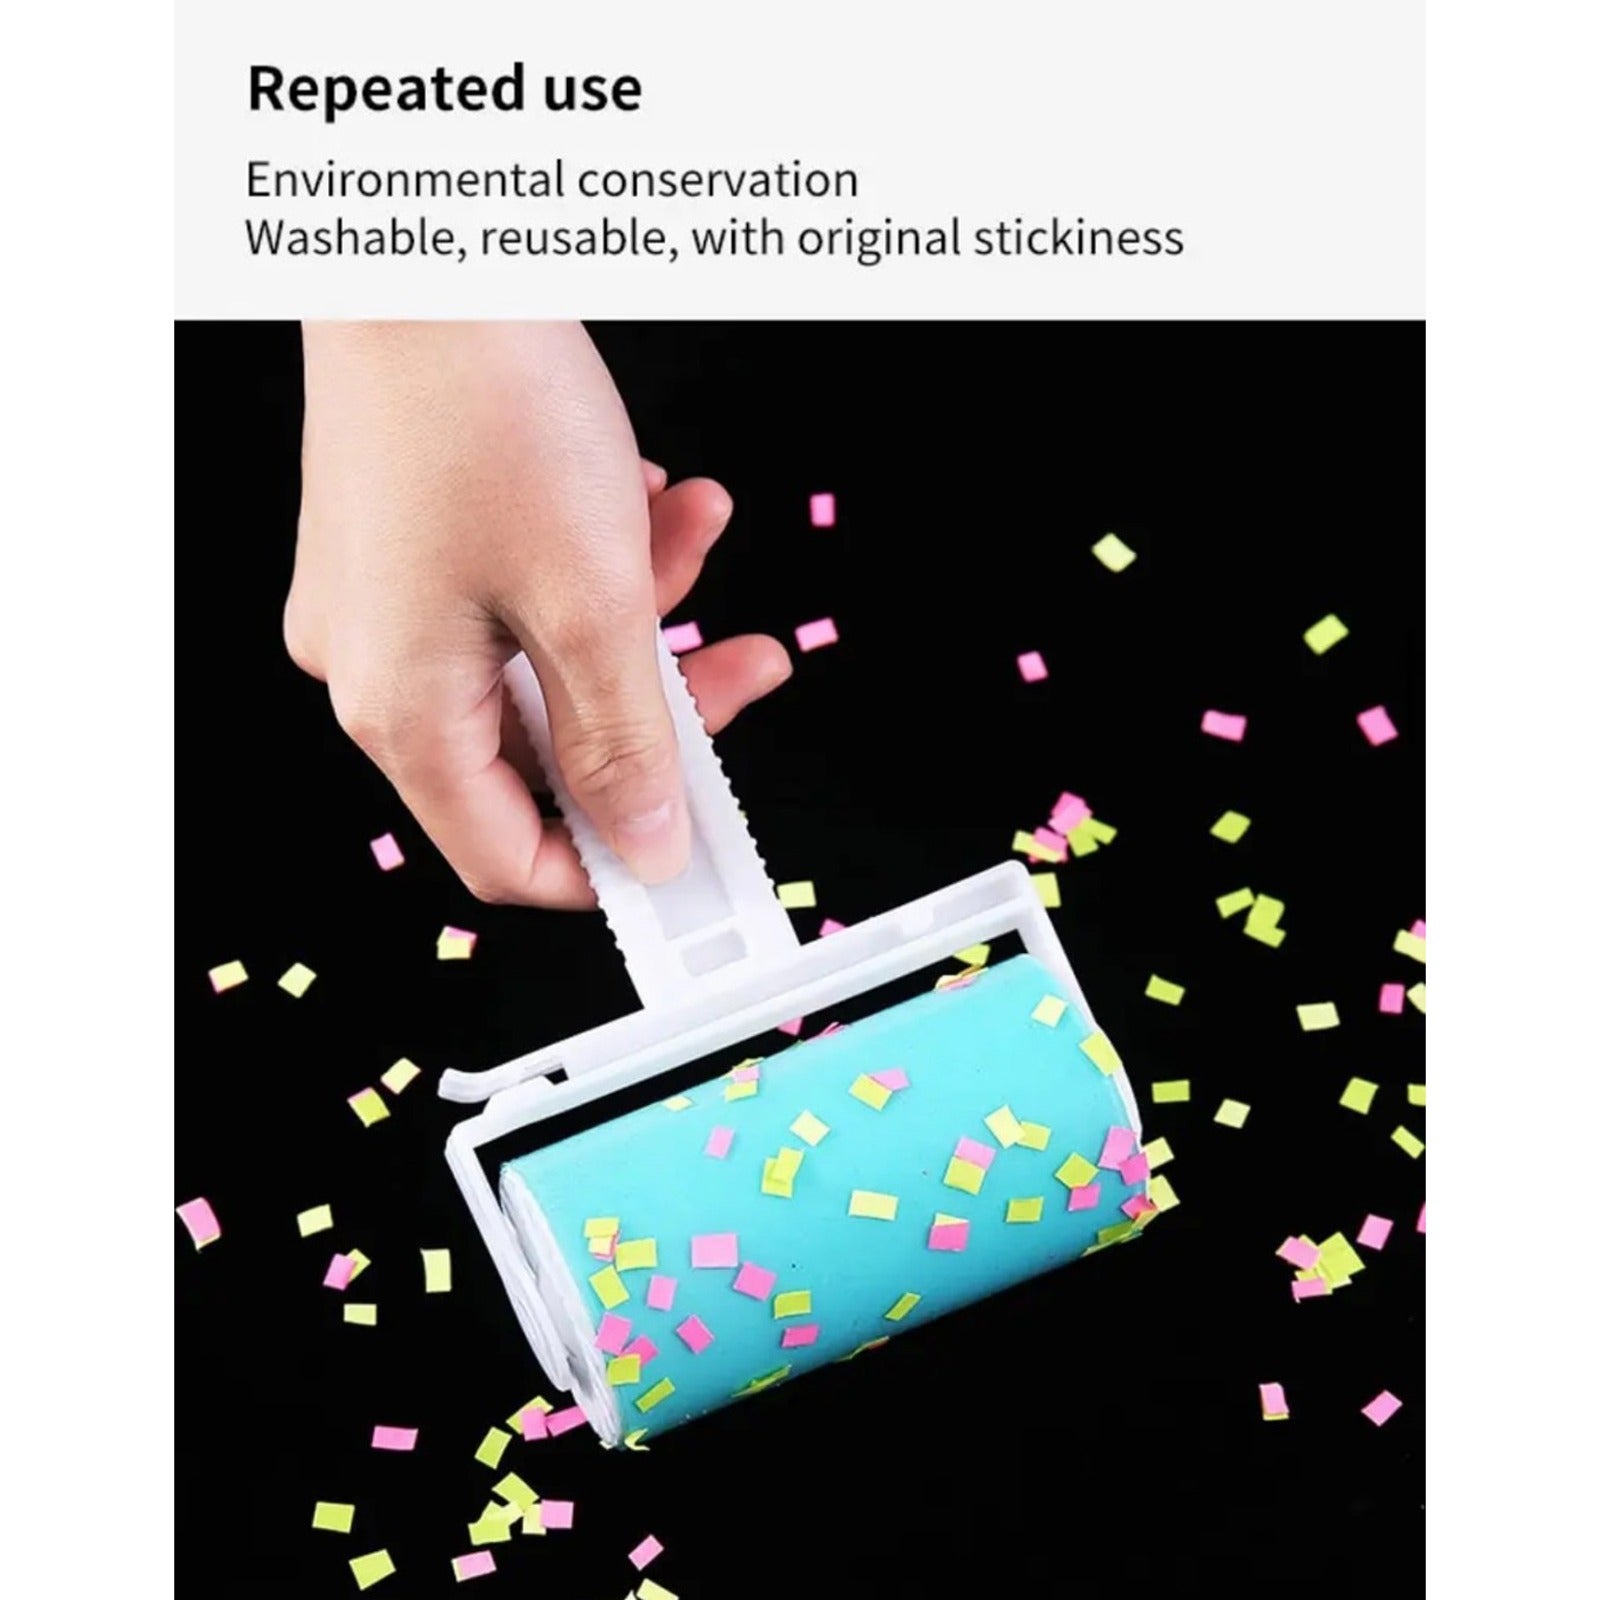 A person rolls confetti using a reusable lint remover